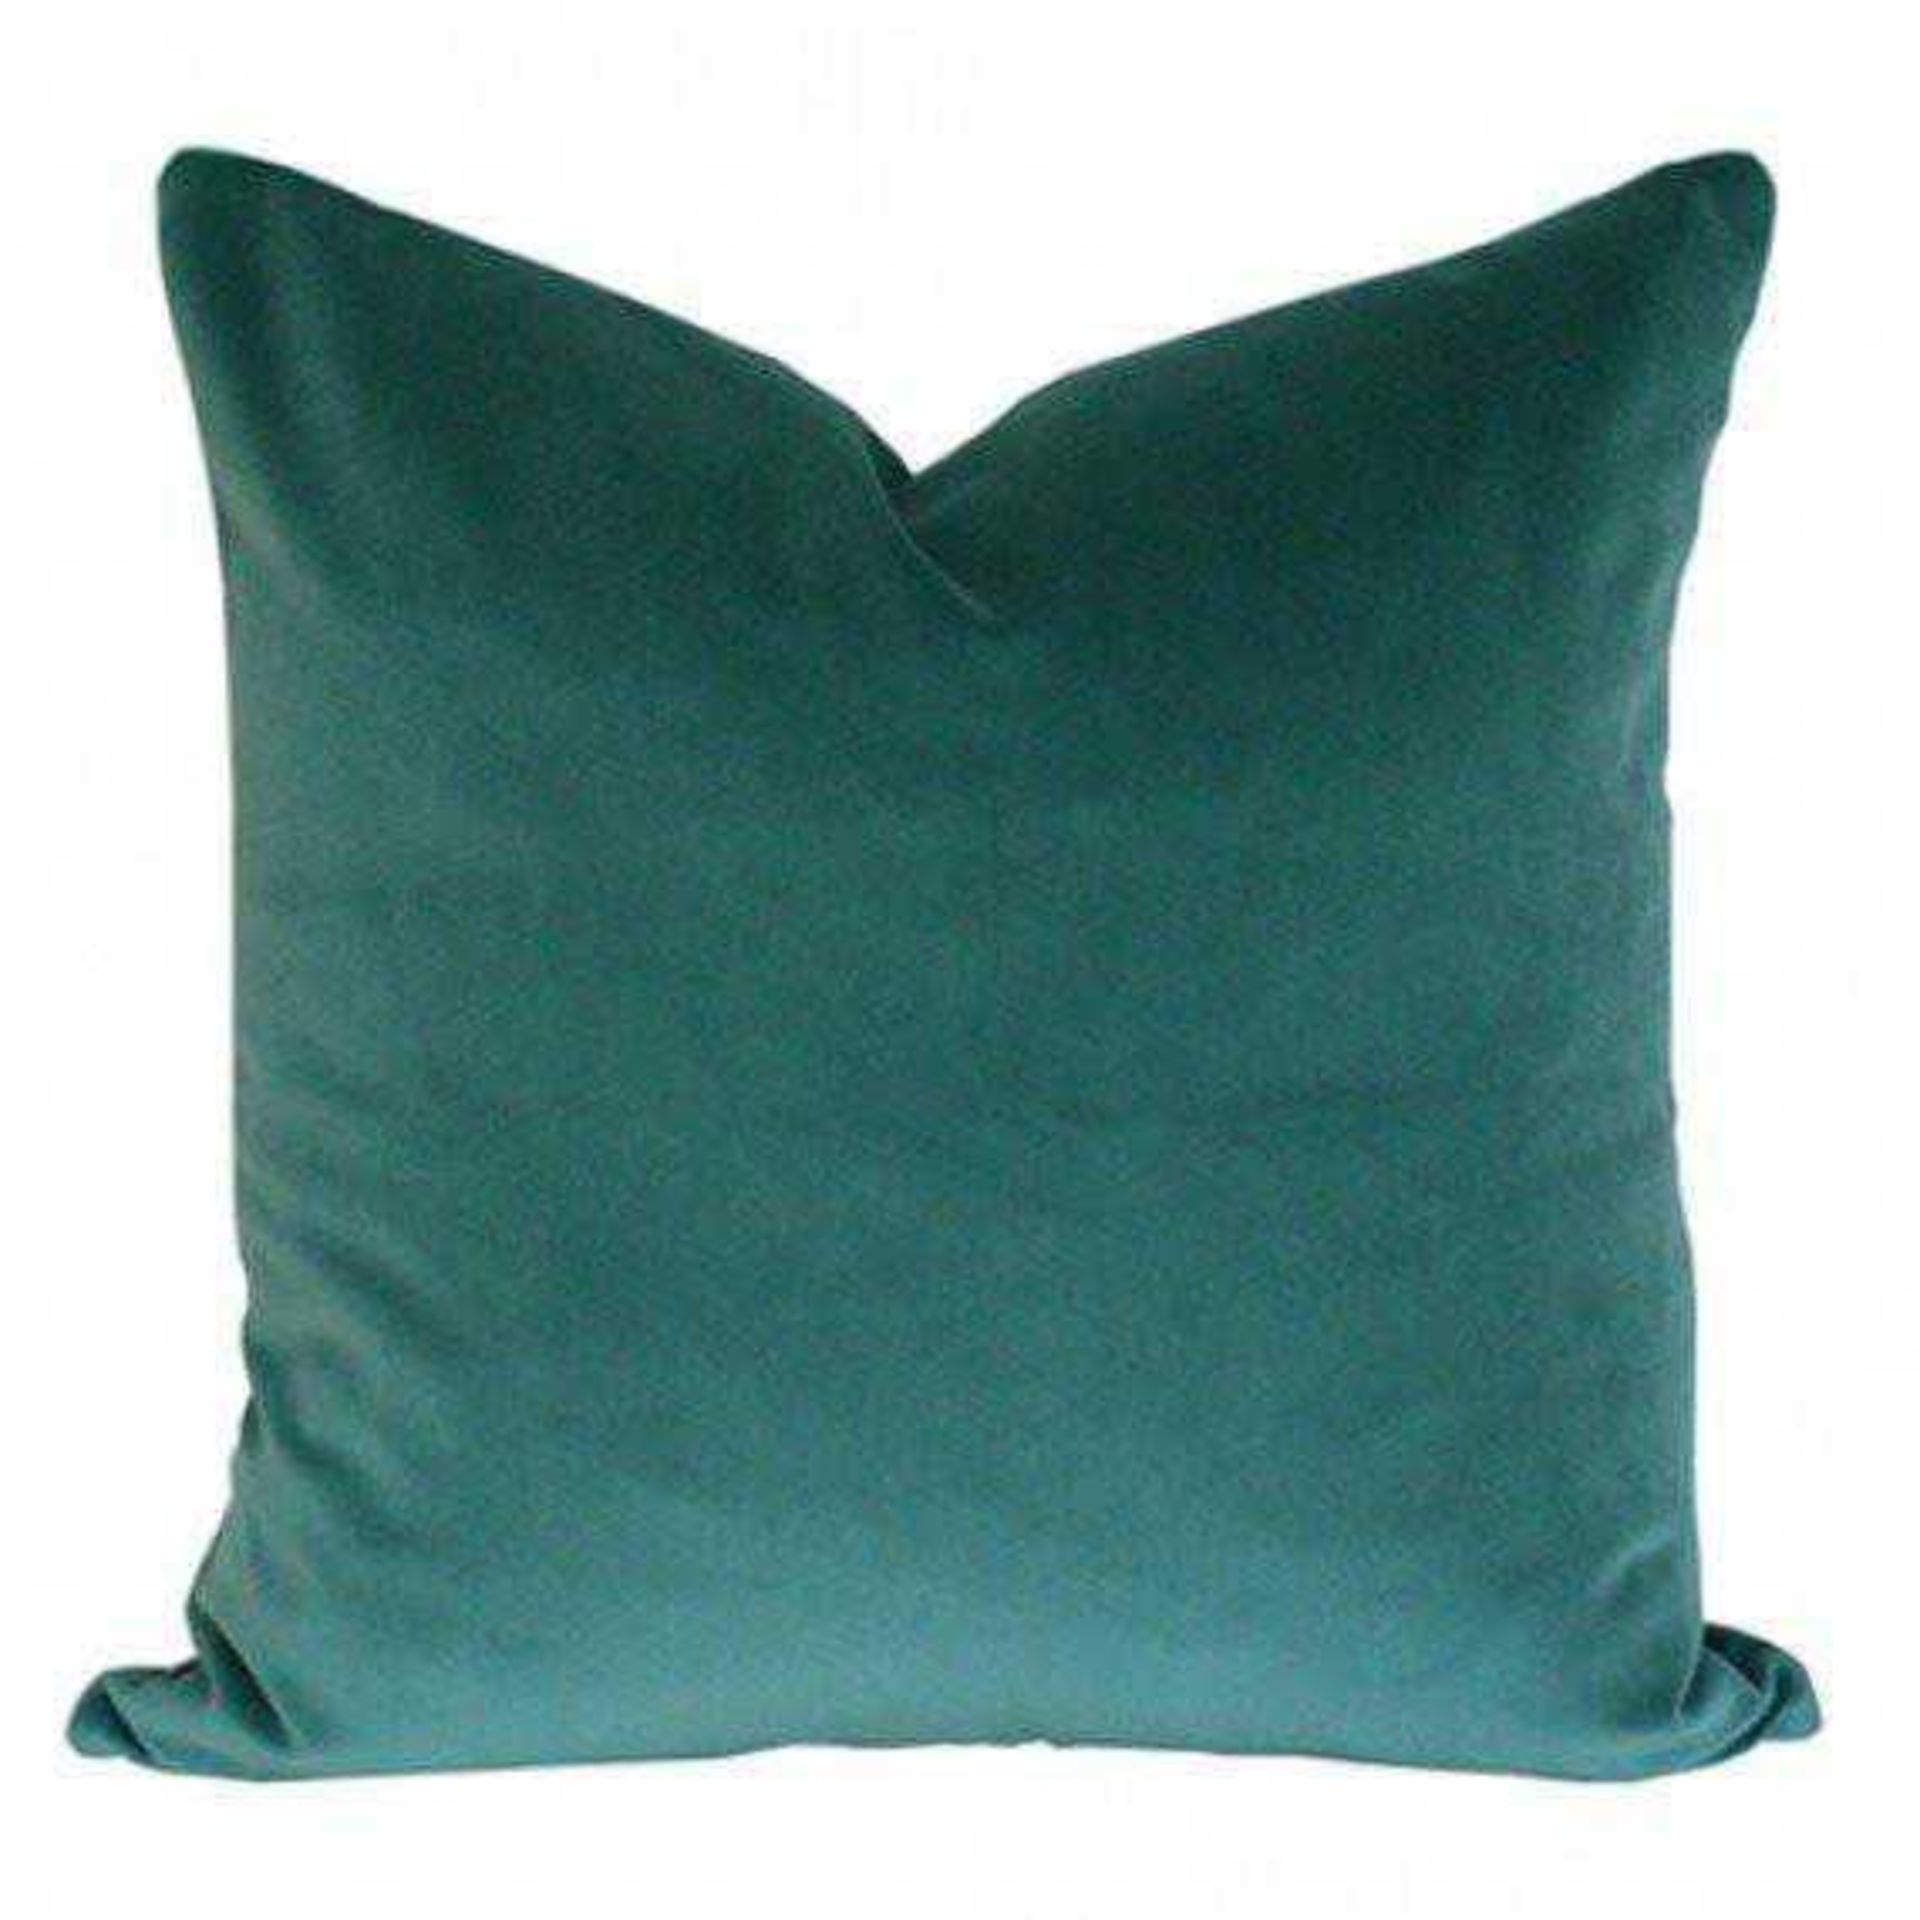 RRP £50 Each Designer John Lewis Loaf Squared Cushions - Image 3 of 3